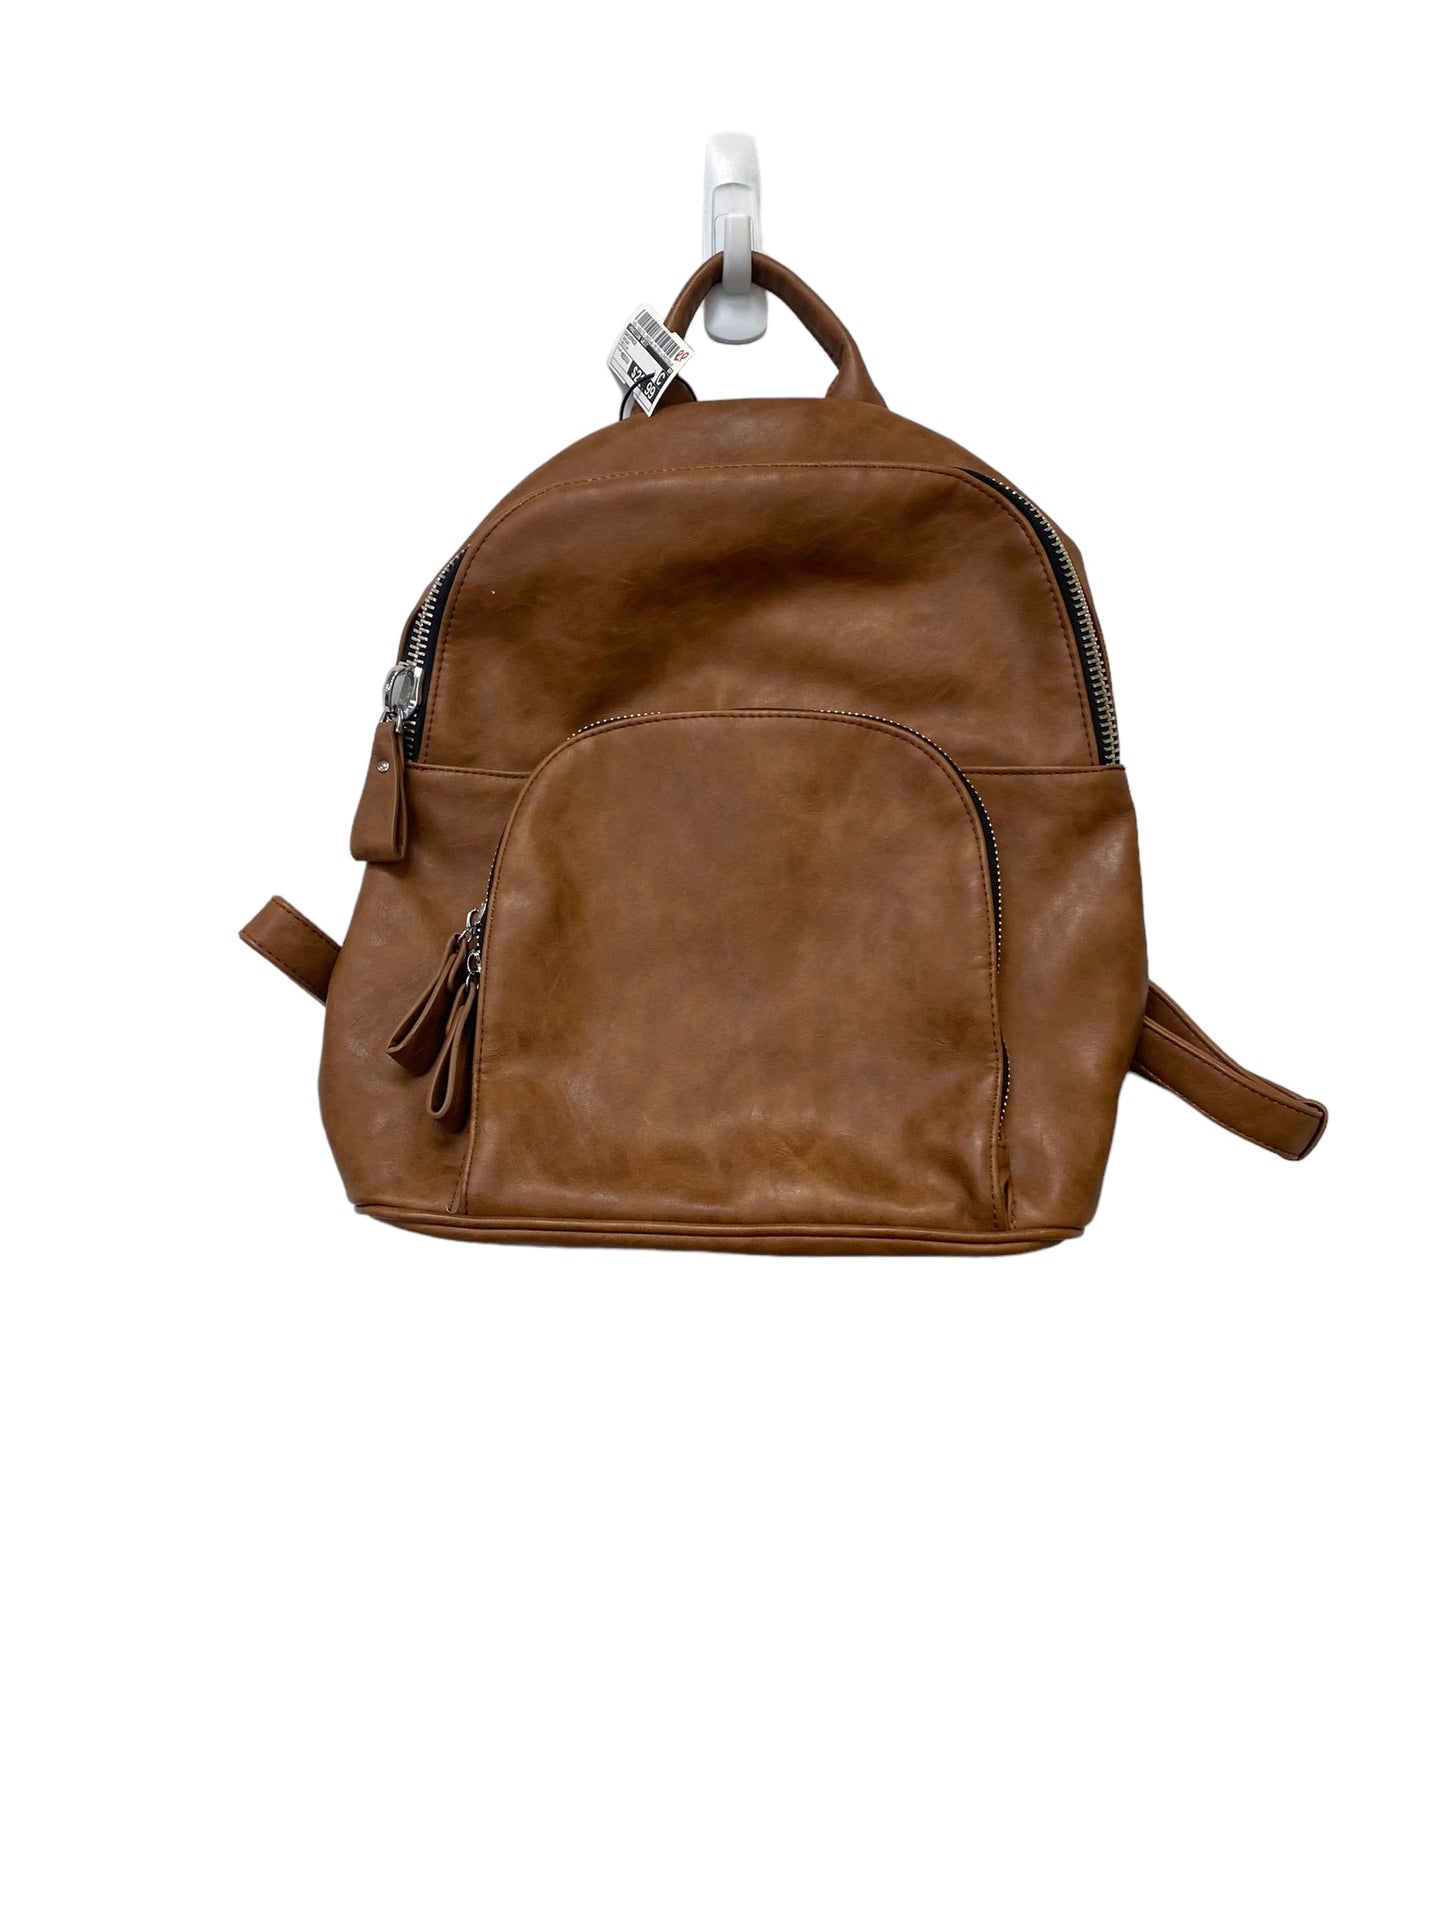 Backpack By Madison West  Size: Medium